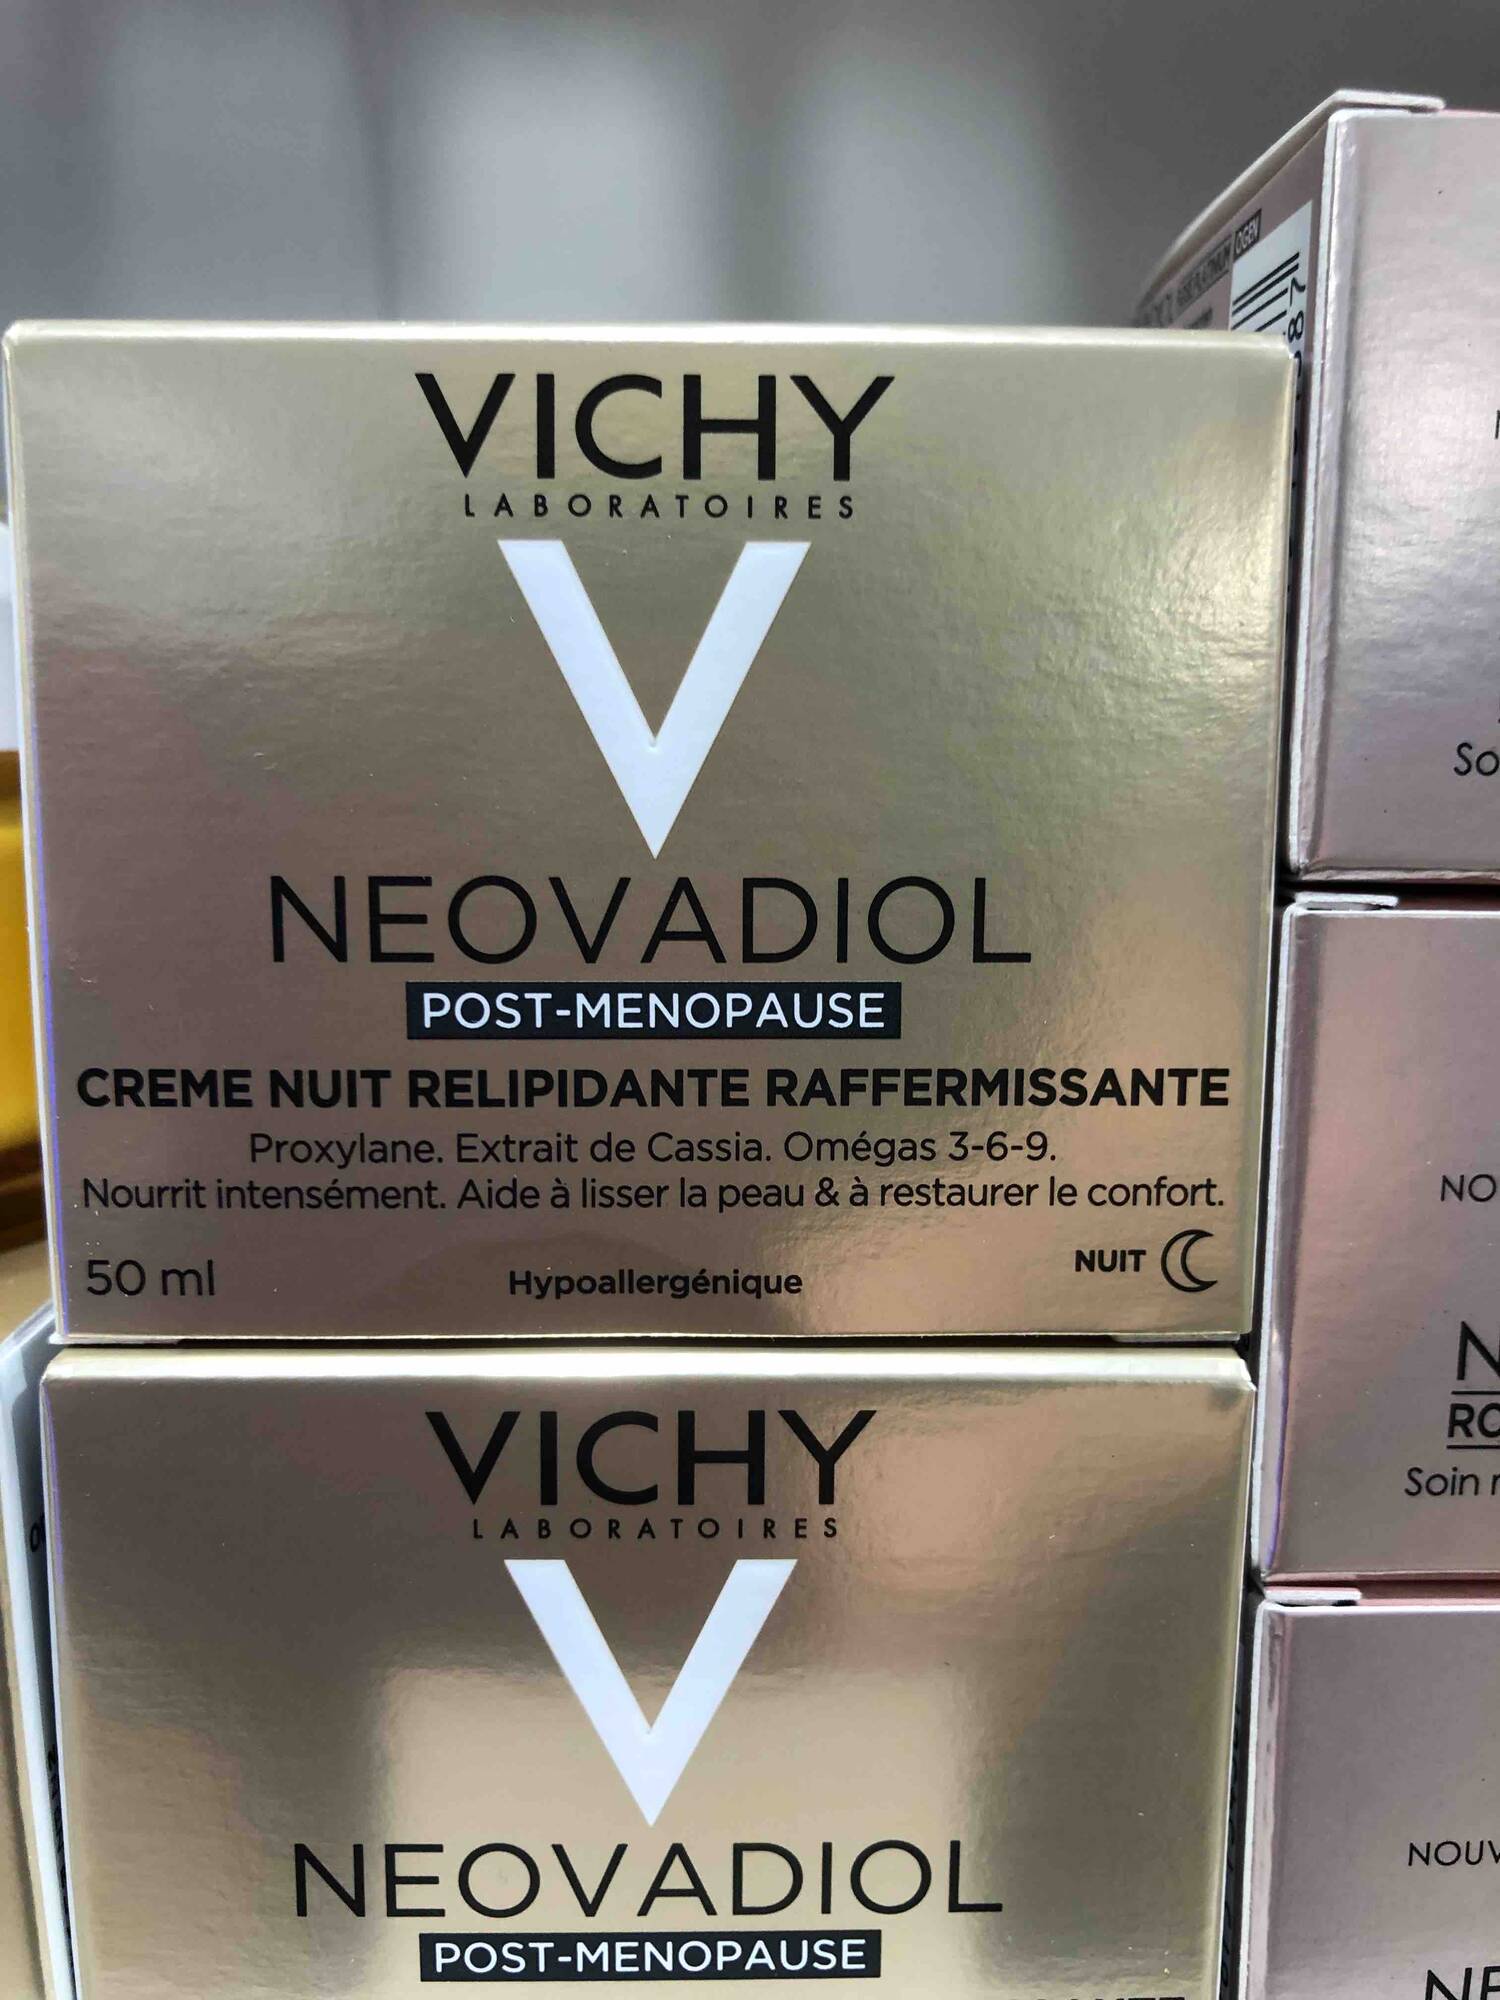 VICHY - Neovadiol - Crème nuit relipidante raffermissante